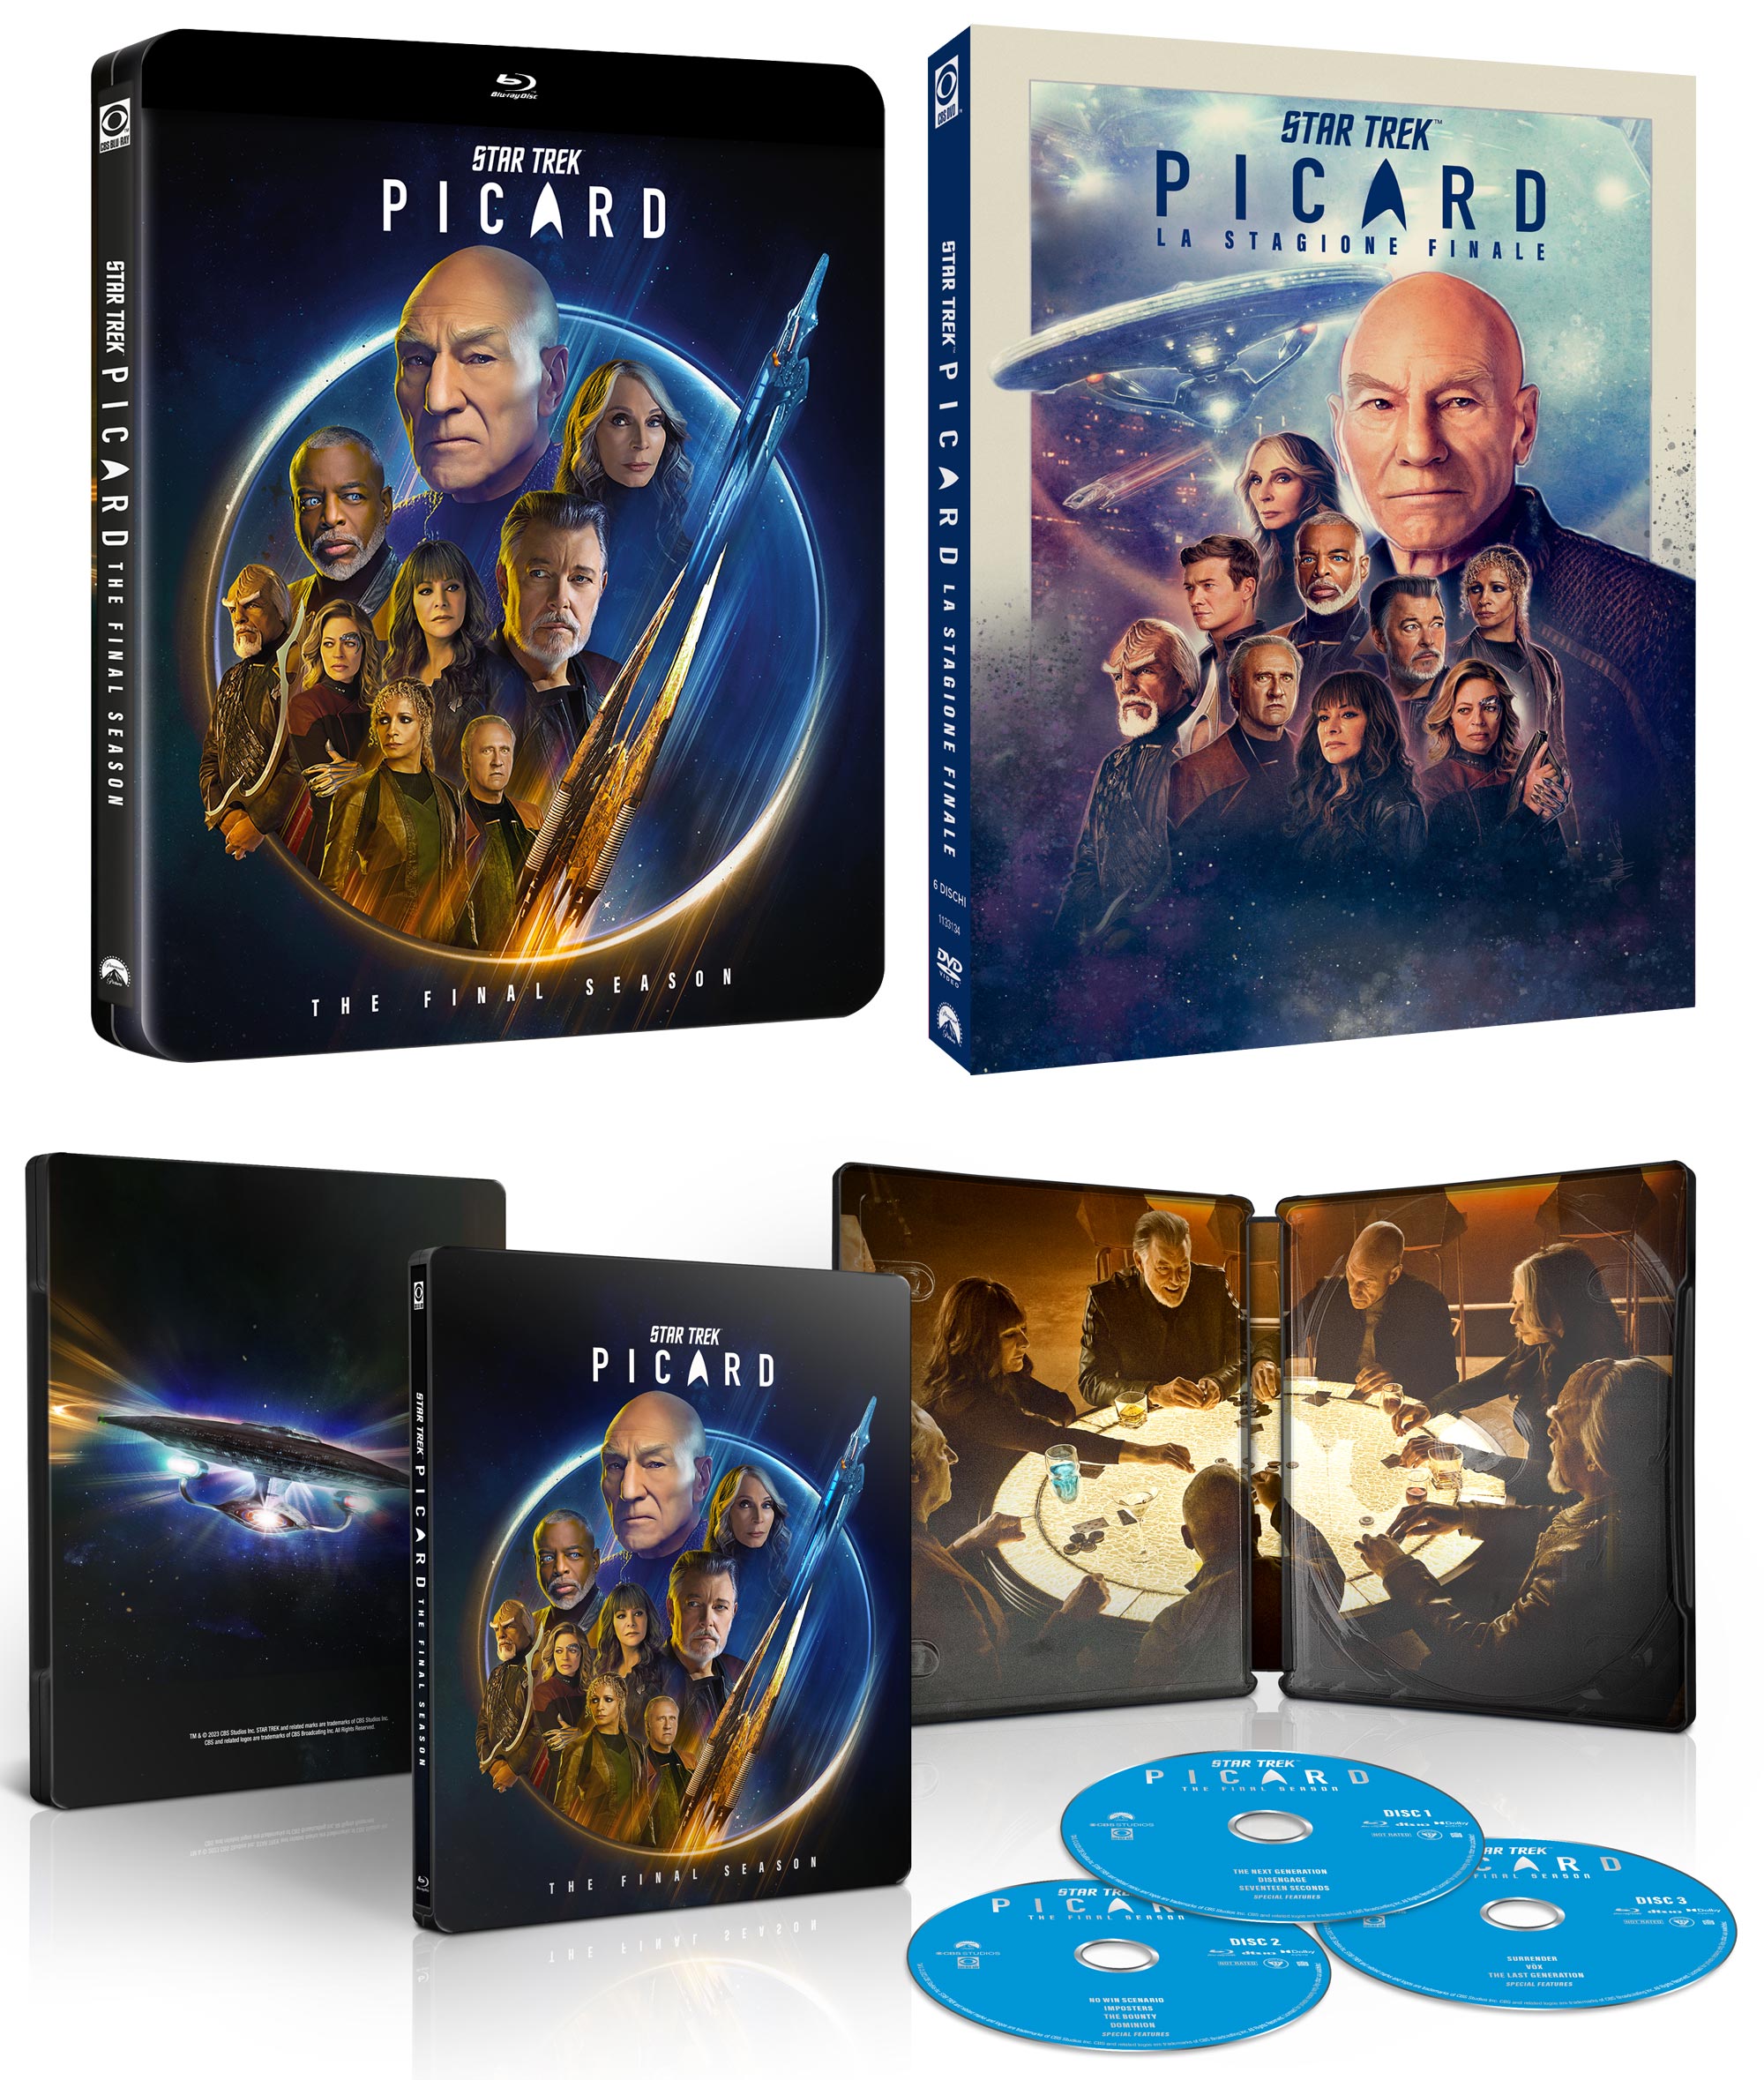 Star Trek Picard - La Stagione Finale in DVD e Steelbook Blu-ray